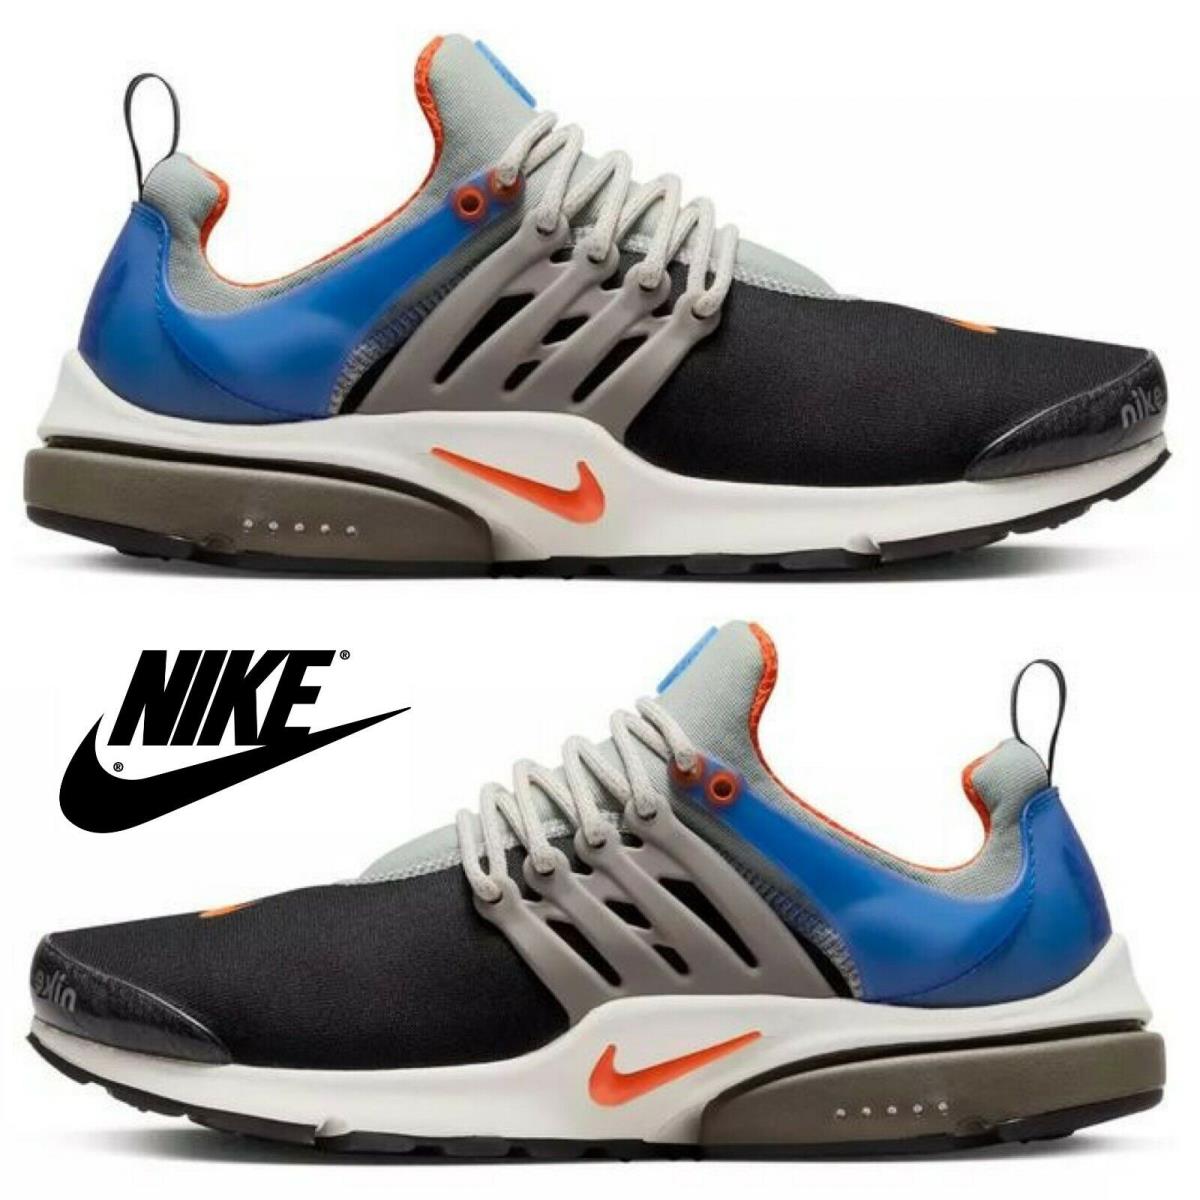 Nike Air Presto Running Sneakers Men`s Comfort Casual Shoes Sport Blue Black - Black, Manufacturer: